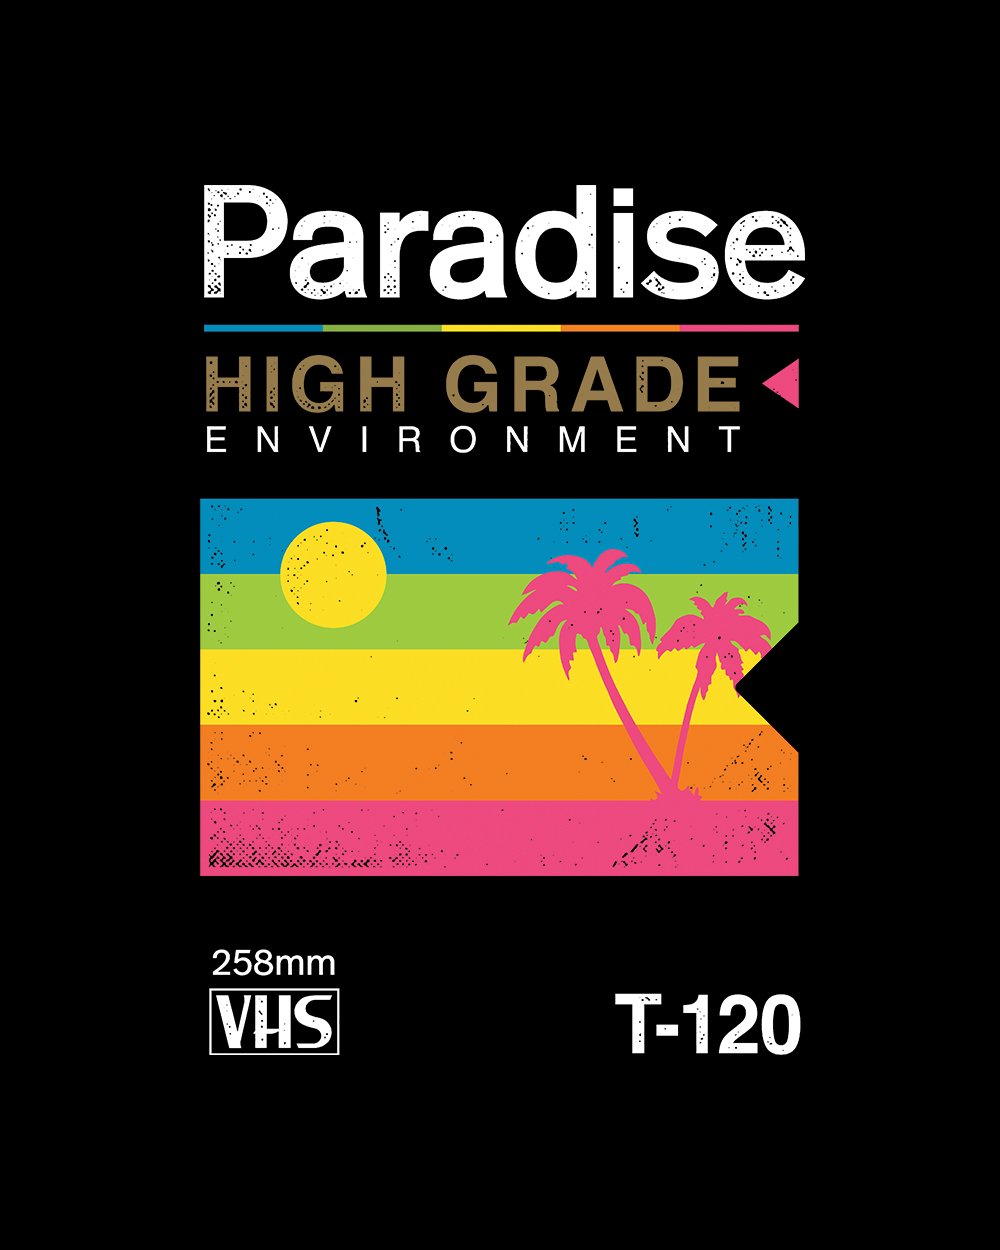 Retro Paradise Sweater Australia Online #colour_black